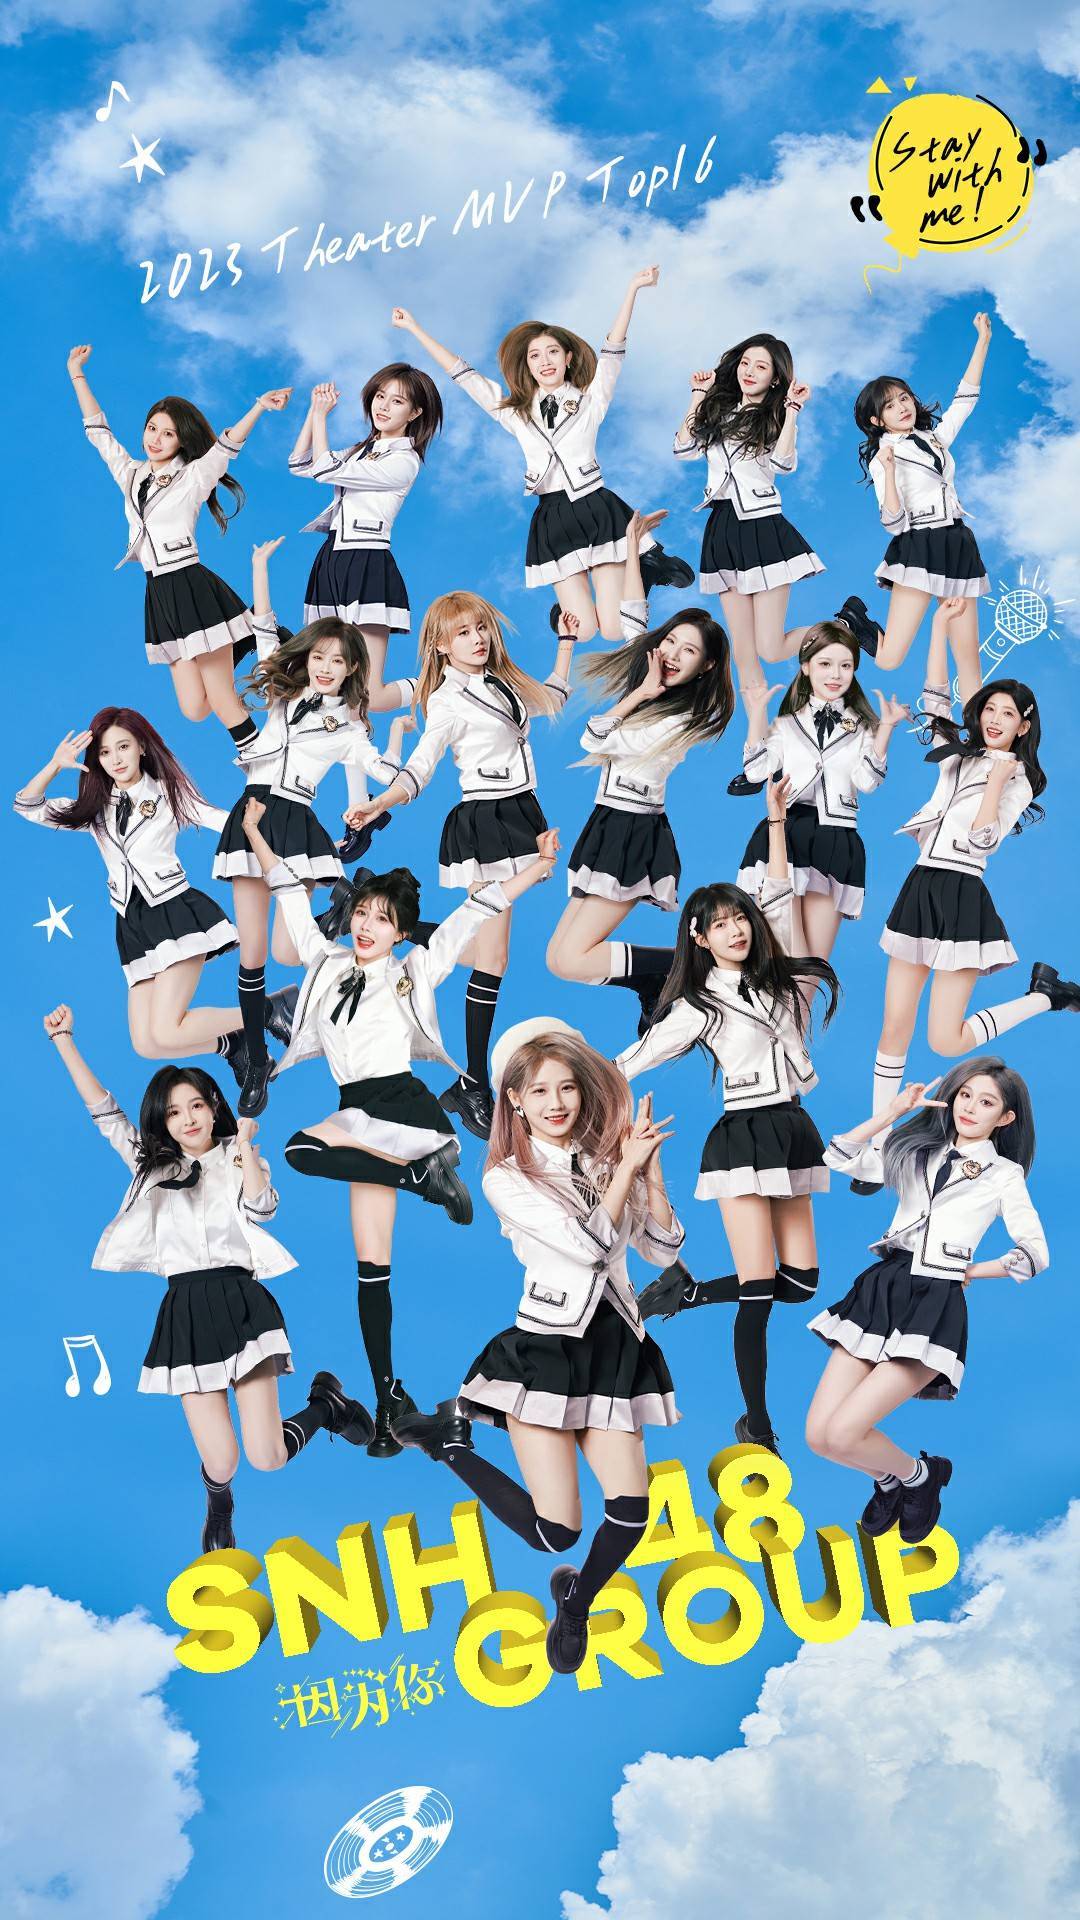 SNH48 GROUP《因为你》MV上线活力少女诠释追梦之旅- 360娱乐